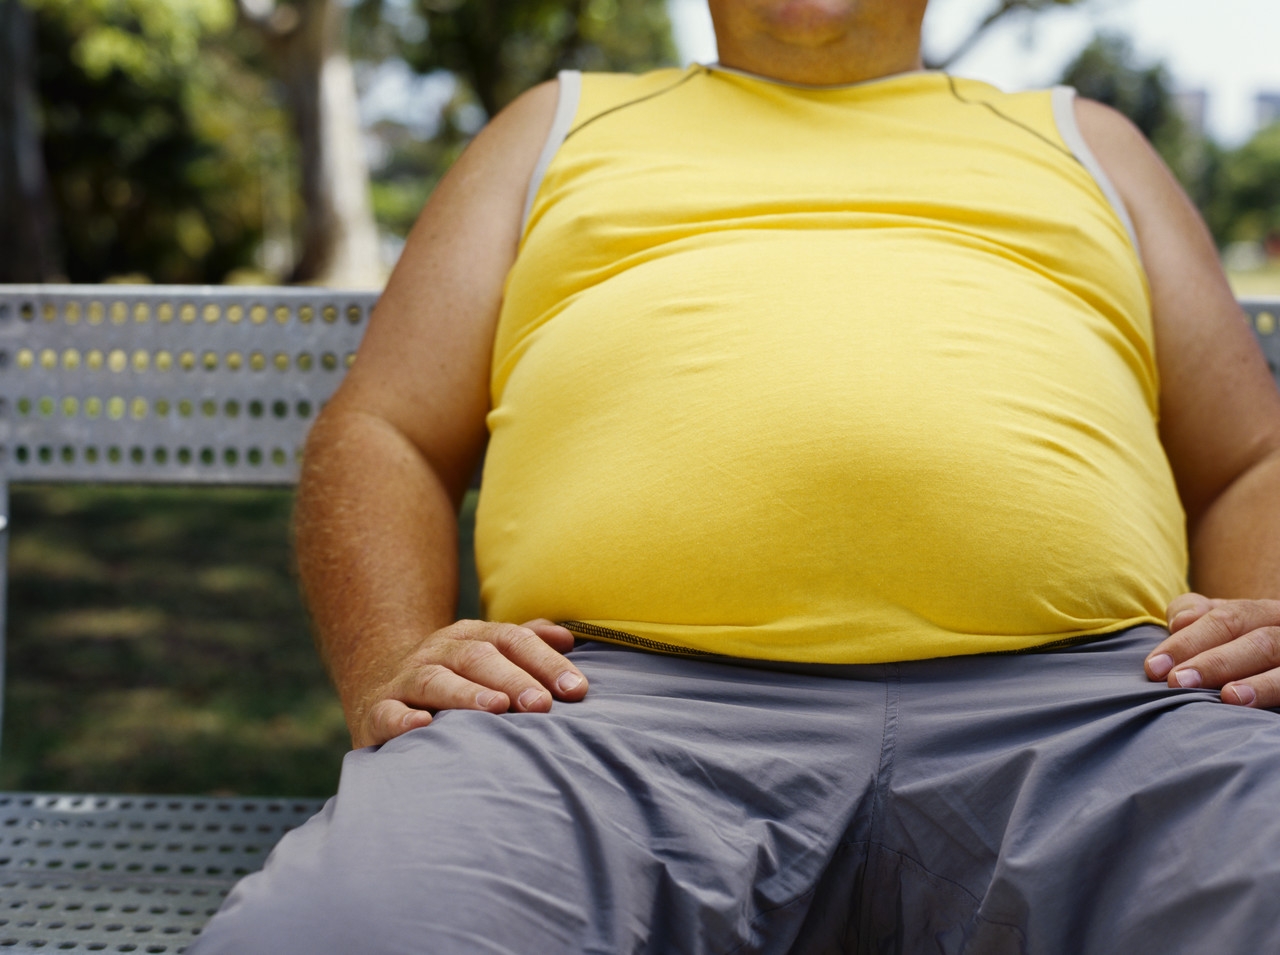 Obesidade Causa Câncer? Descubra os Perigos Reais